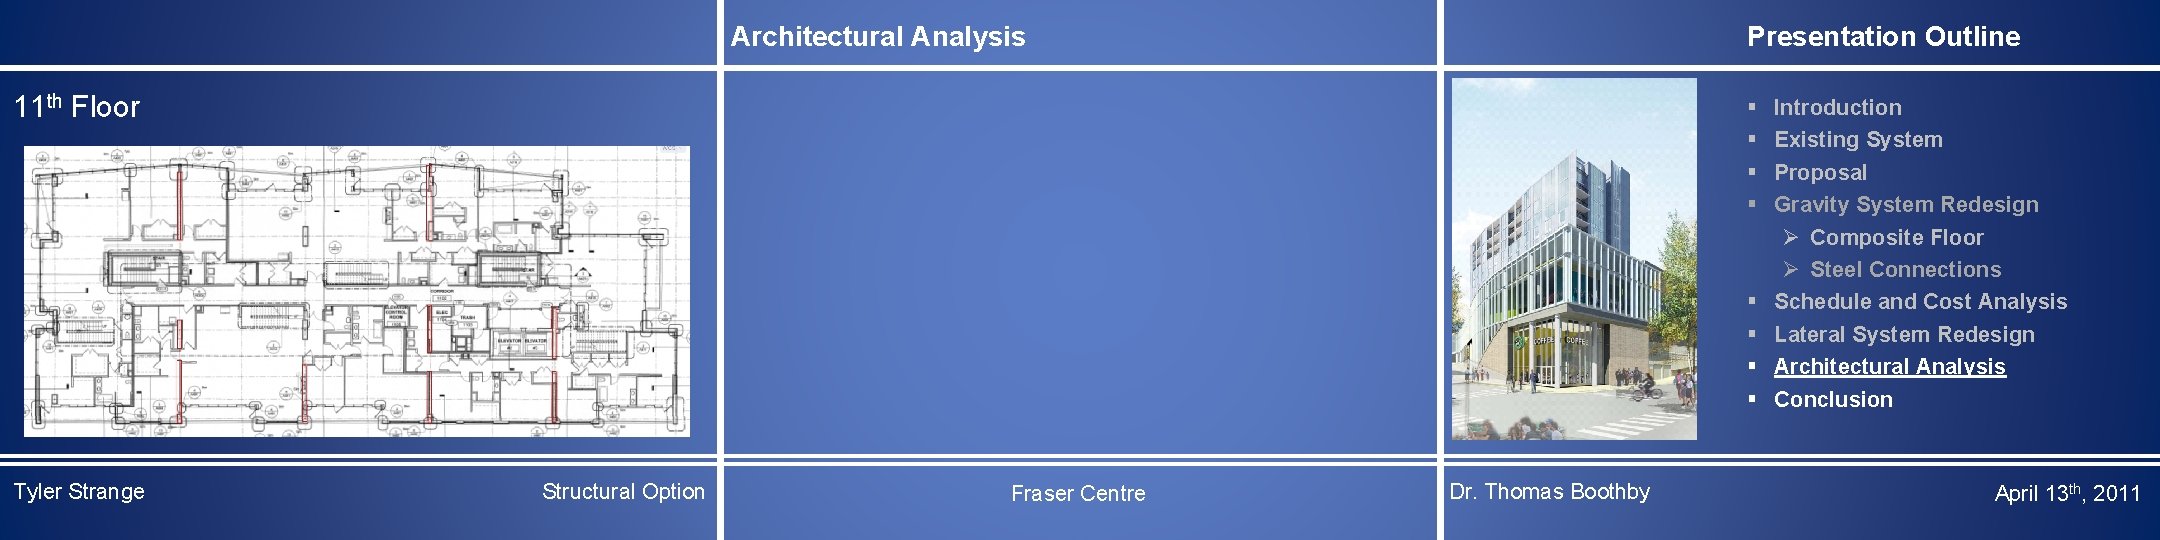 Presentation Outline Architectural Analysis 11 th Floor § § § § Tyler Strange Structural